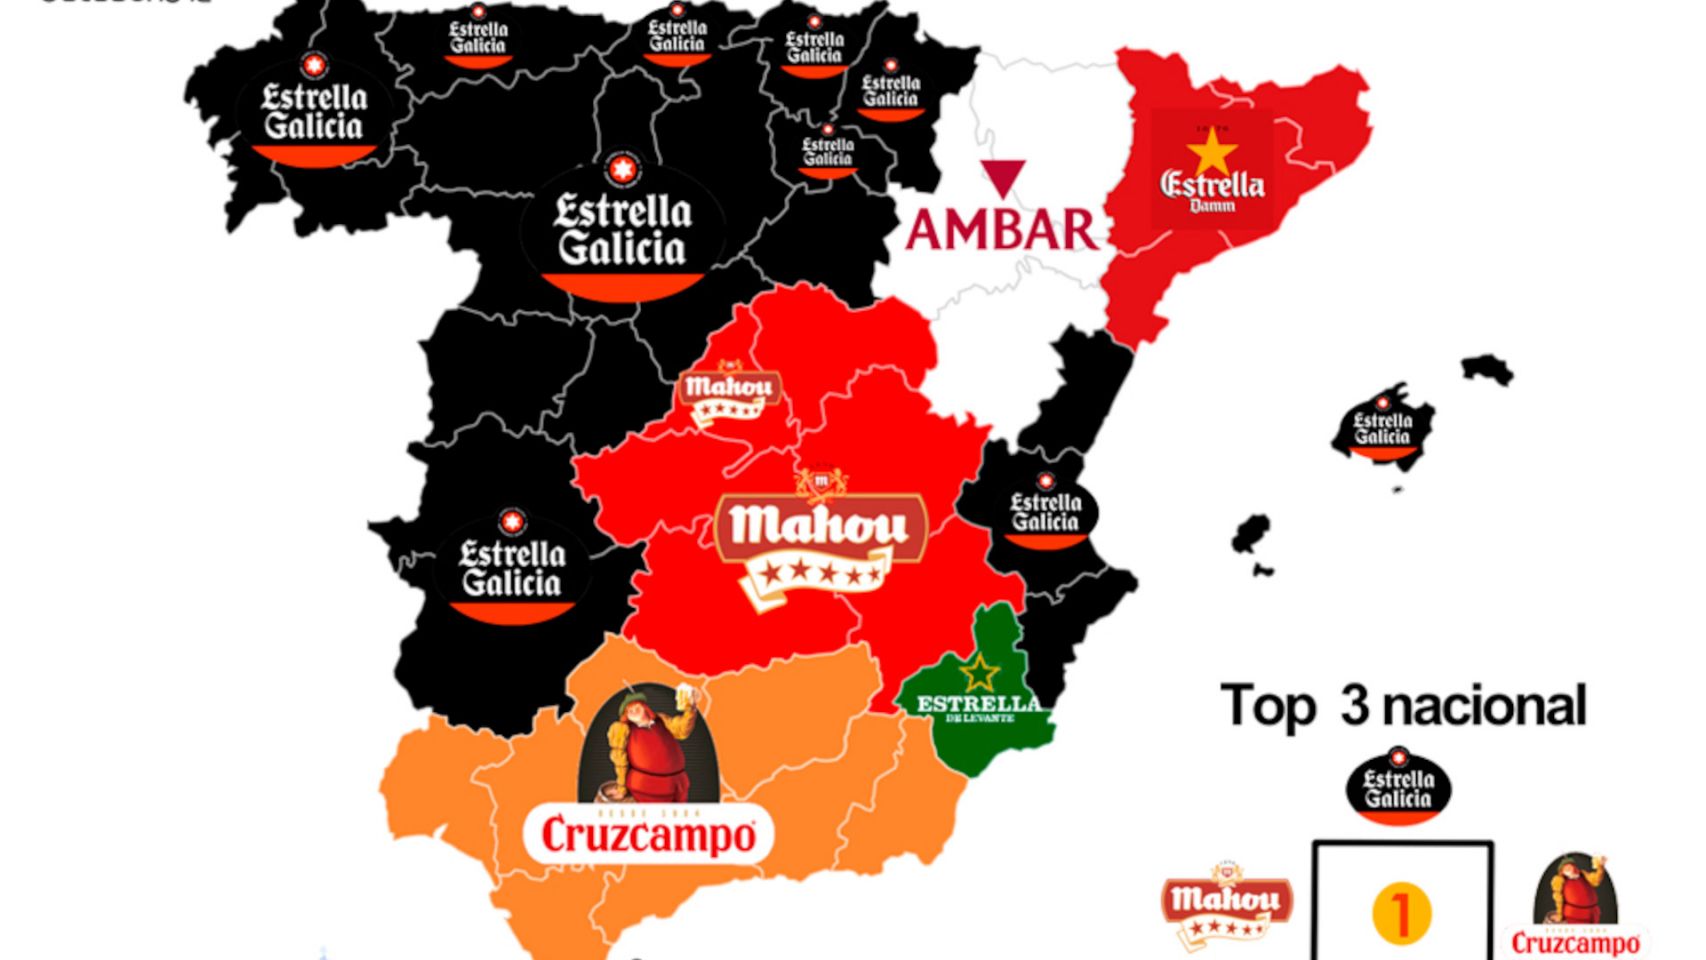 Mapa de preferencias de marca de cerveza por España